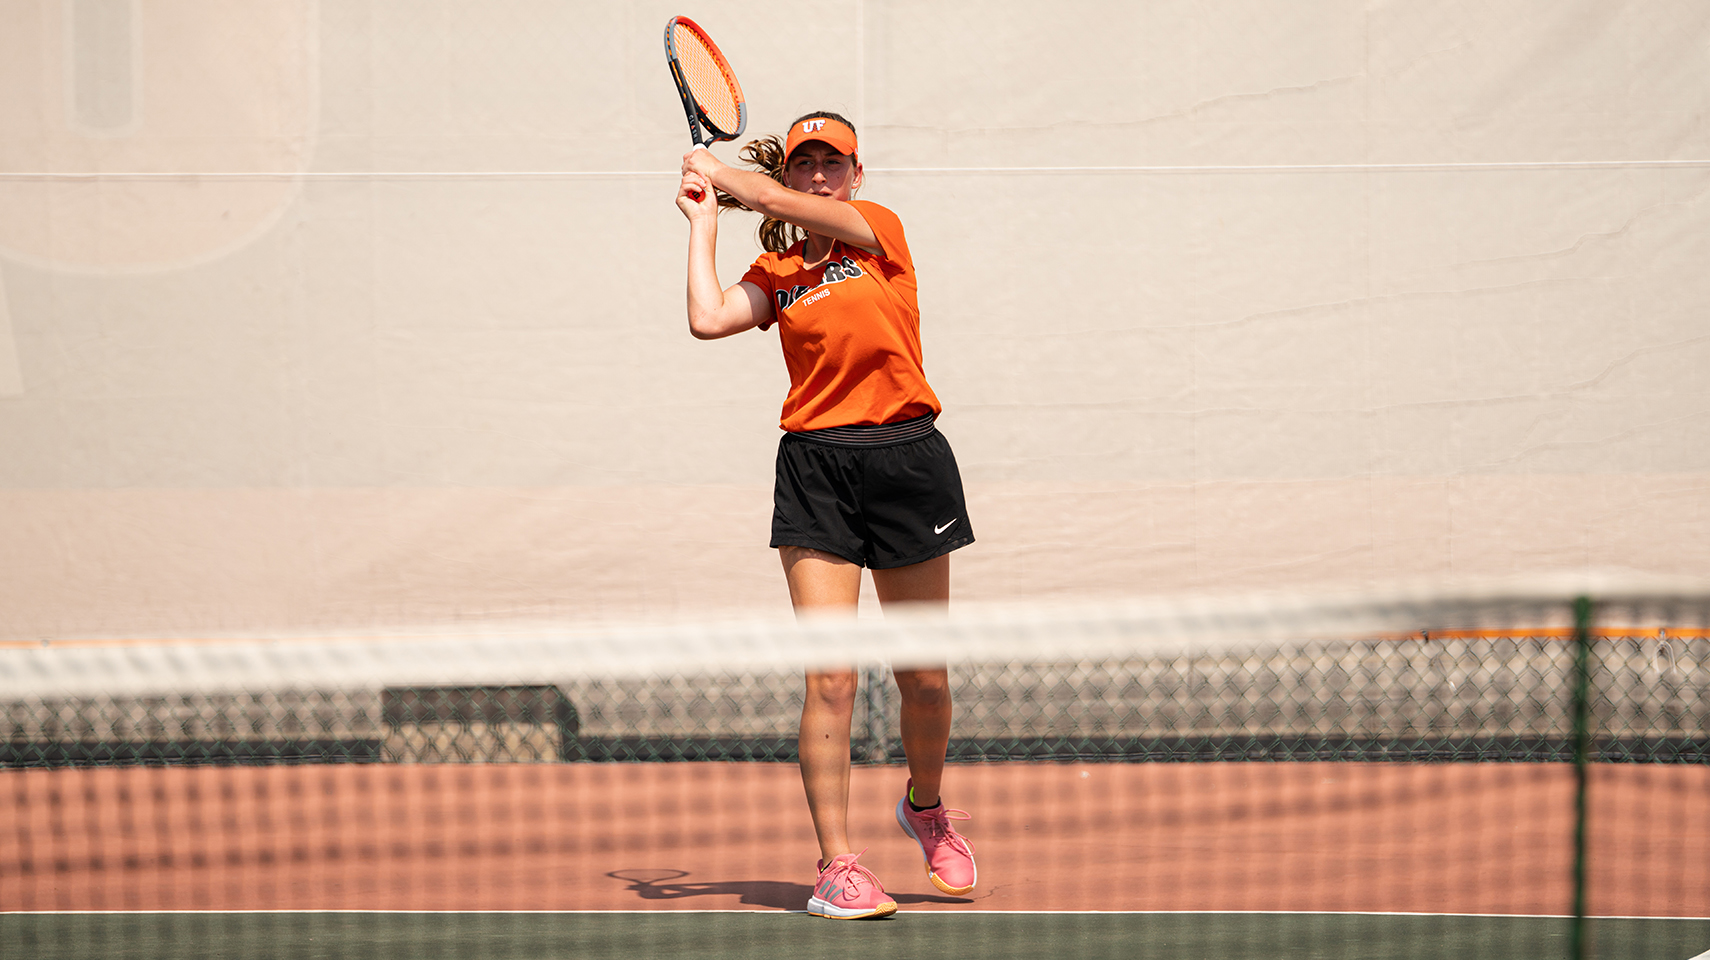 Women's tennis player in orange returning a serve